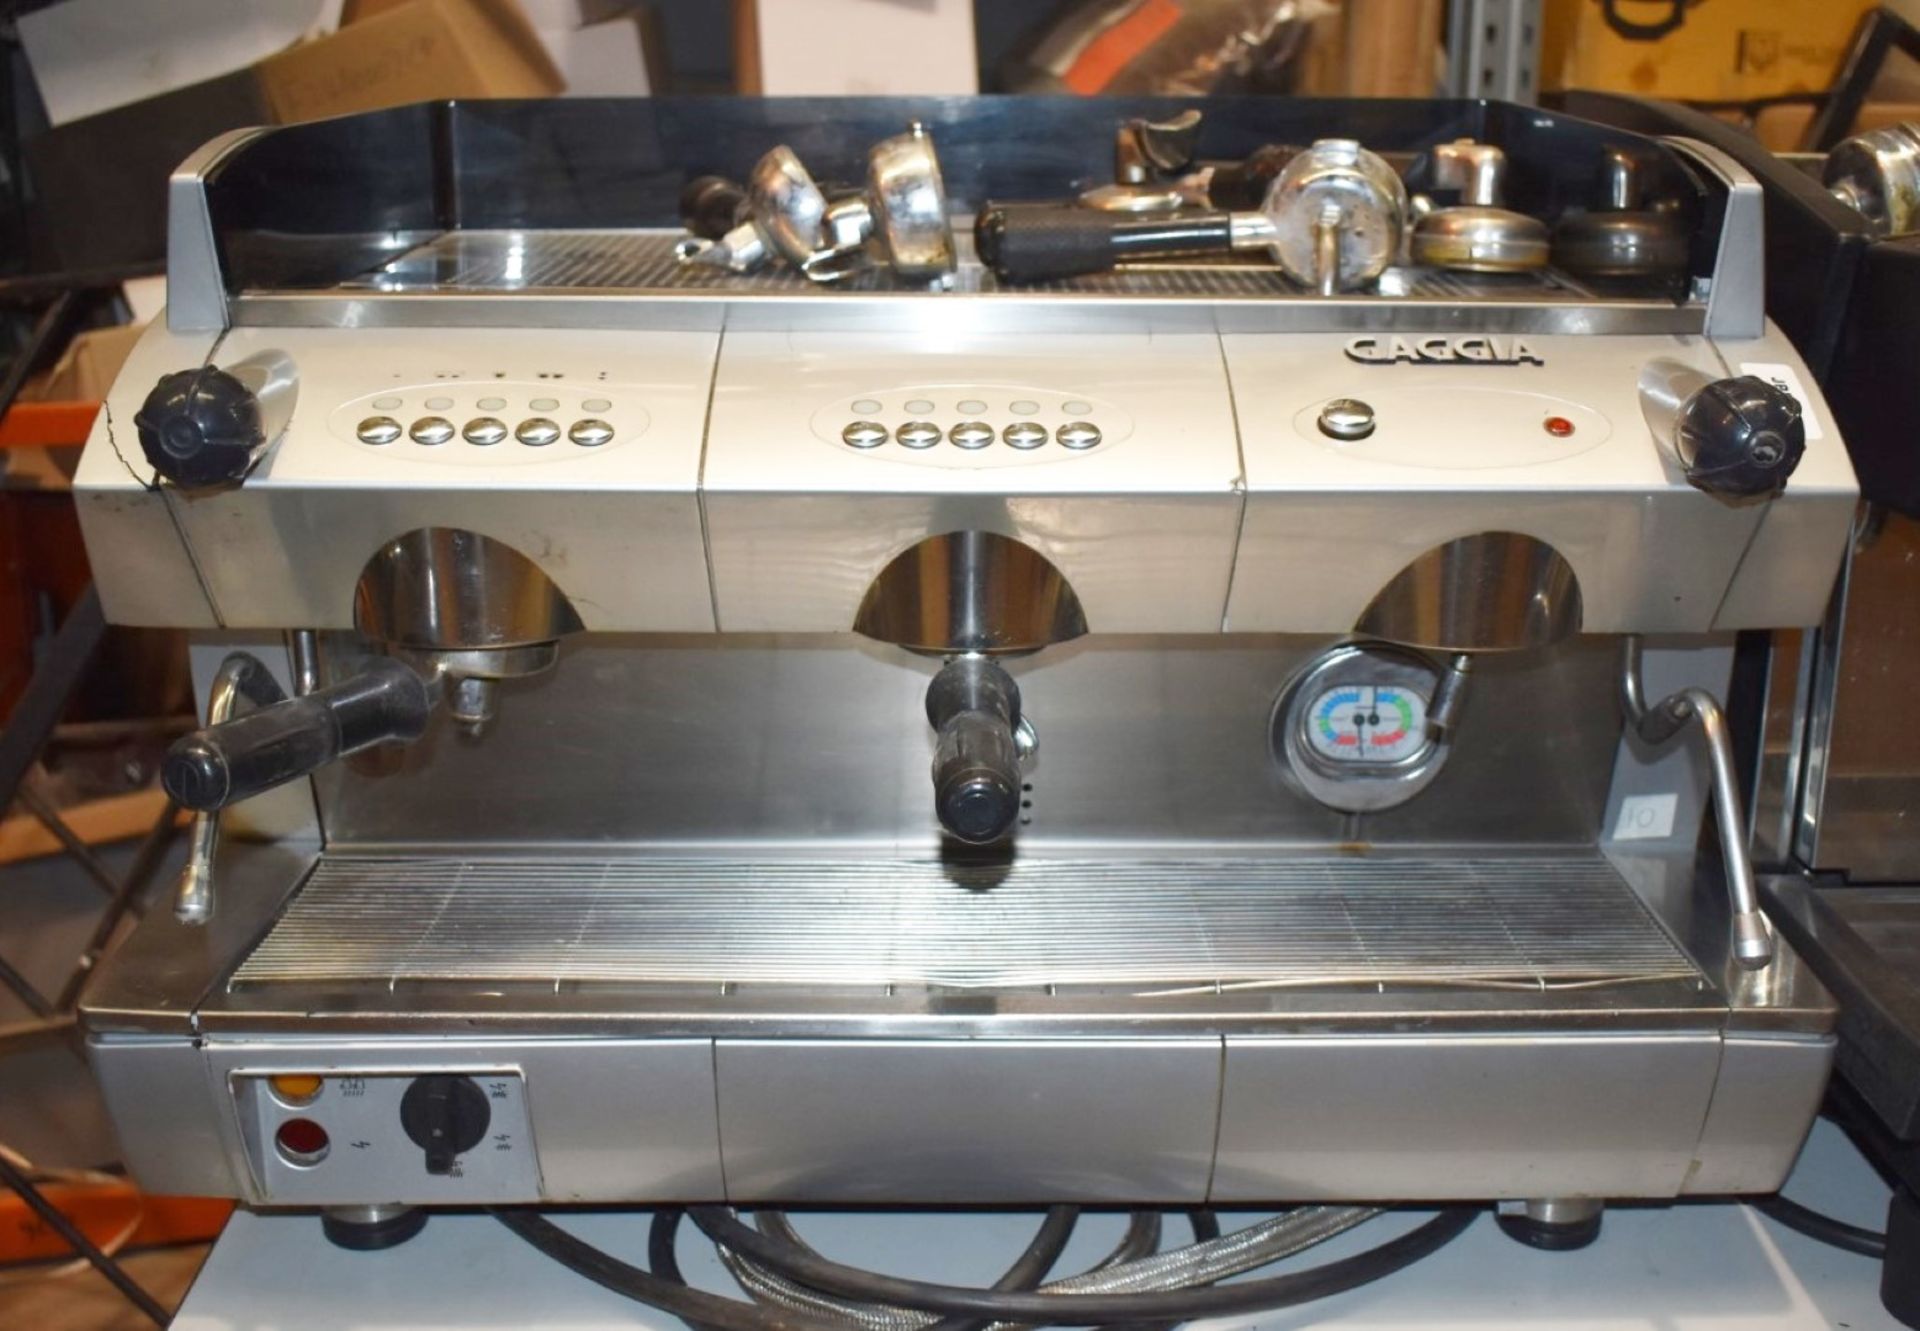 1 x Gaggia Commercial Two Group Espresso Coffee Machine Beige Finish - Size H52 x W74 x D58 cms -